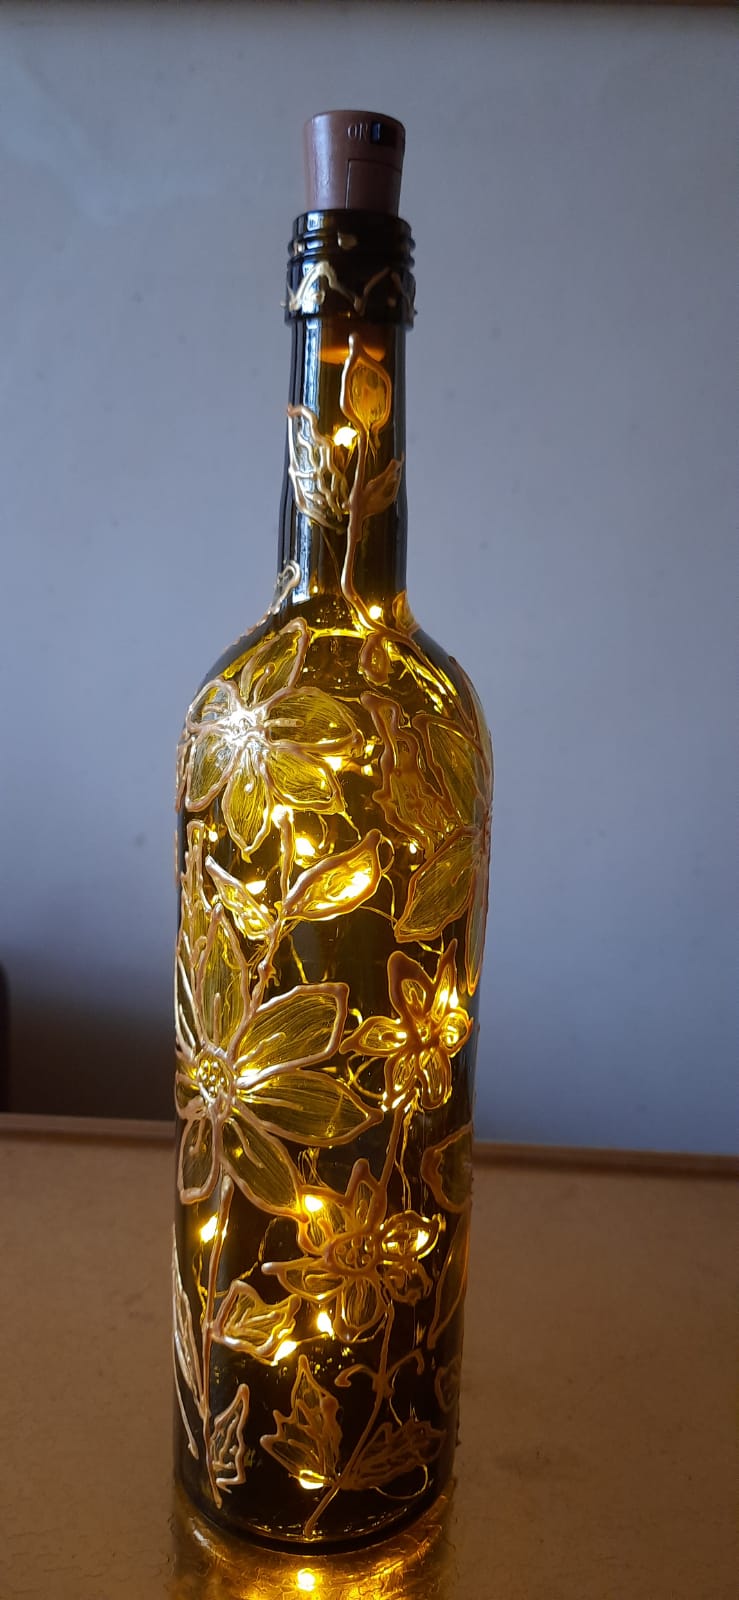 Hand Painted Bottle - Golden Daisy